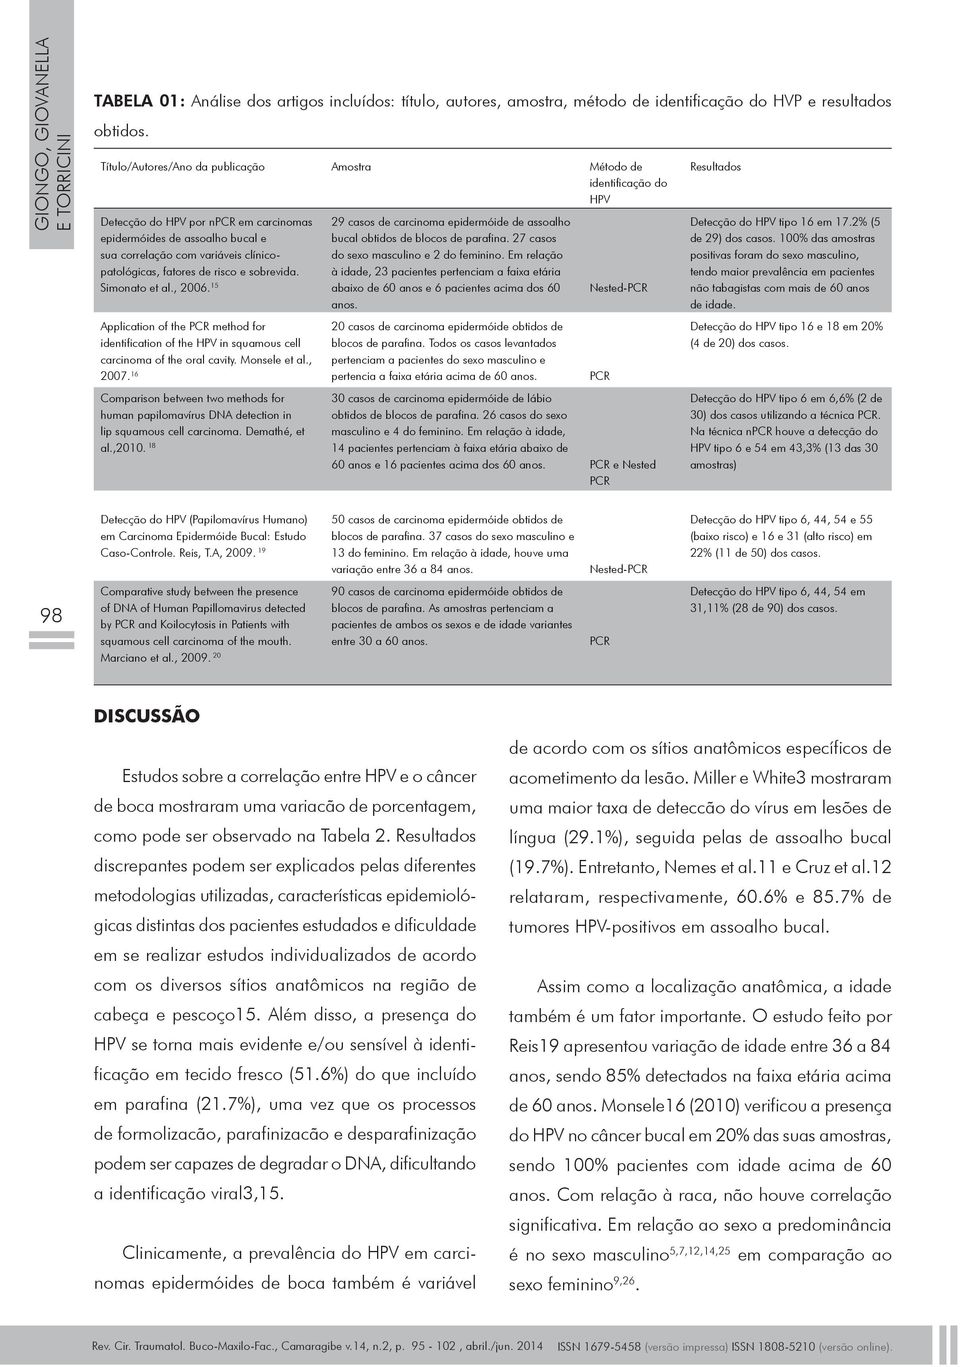 fatores de risco e sobrevida. Simonato et al., 2006. 15 Application of the PCR method for identification of the HPV in squamous cell carcinoma of the oral cavity. Monsele et al., 2007.